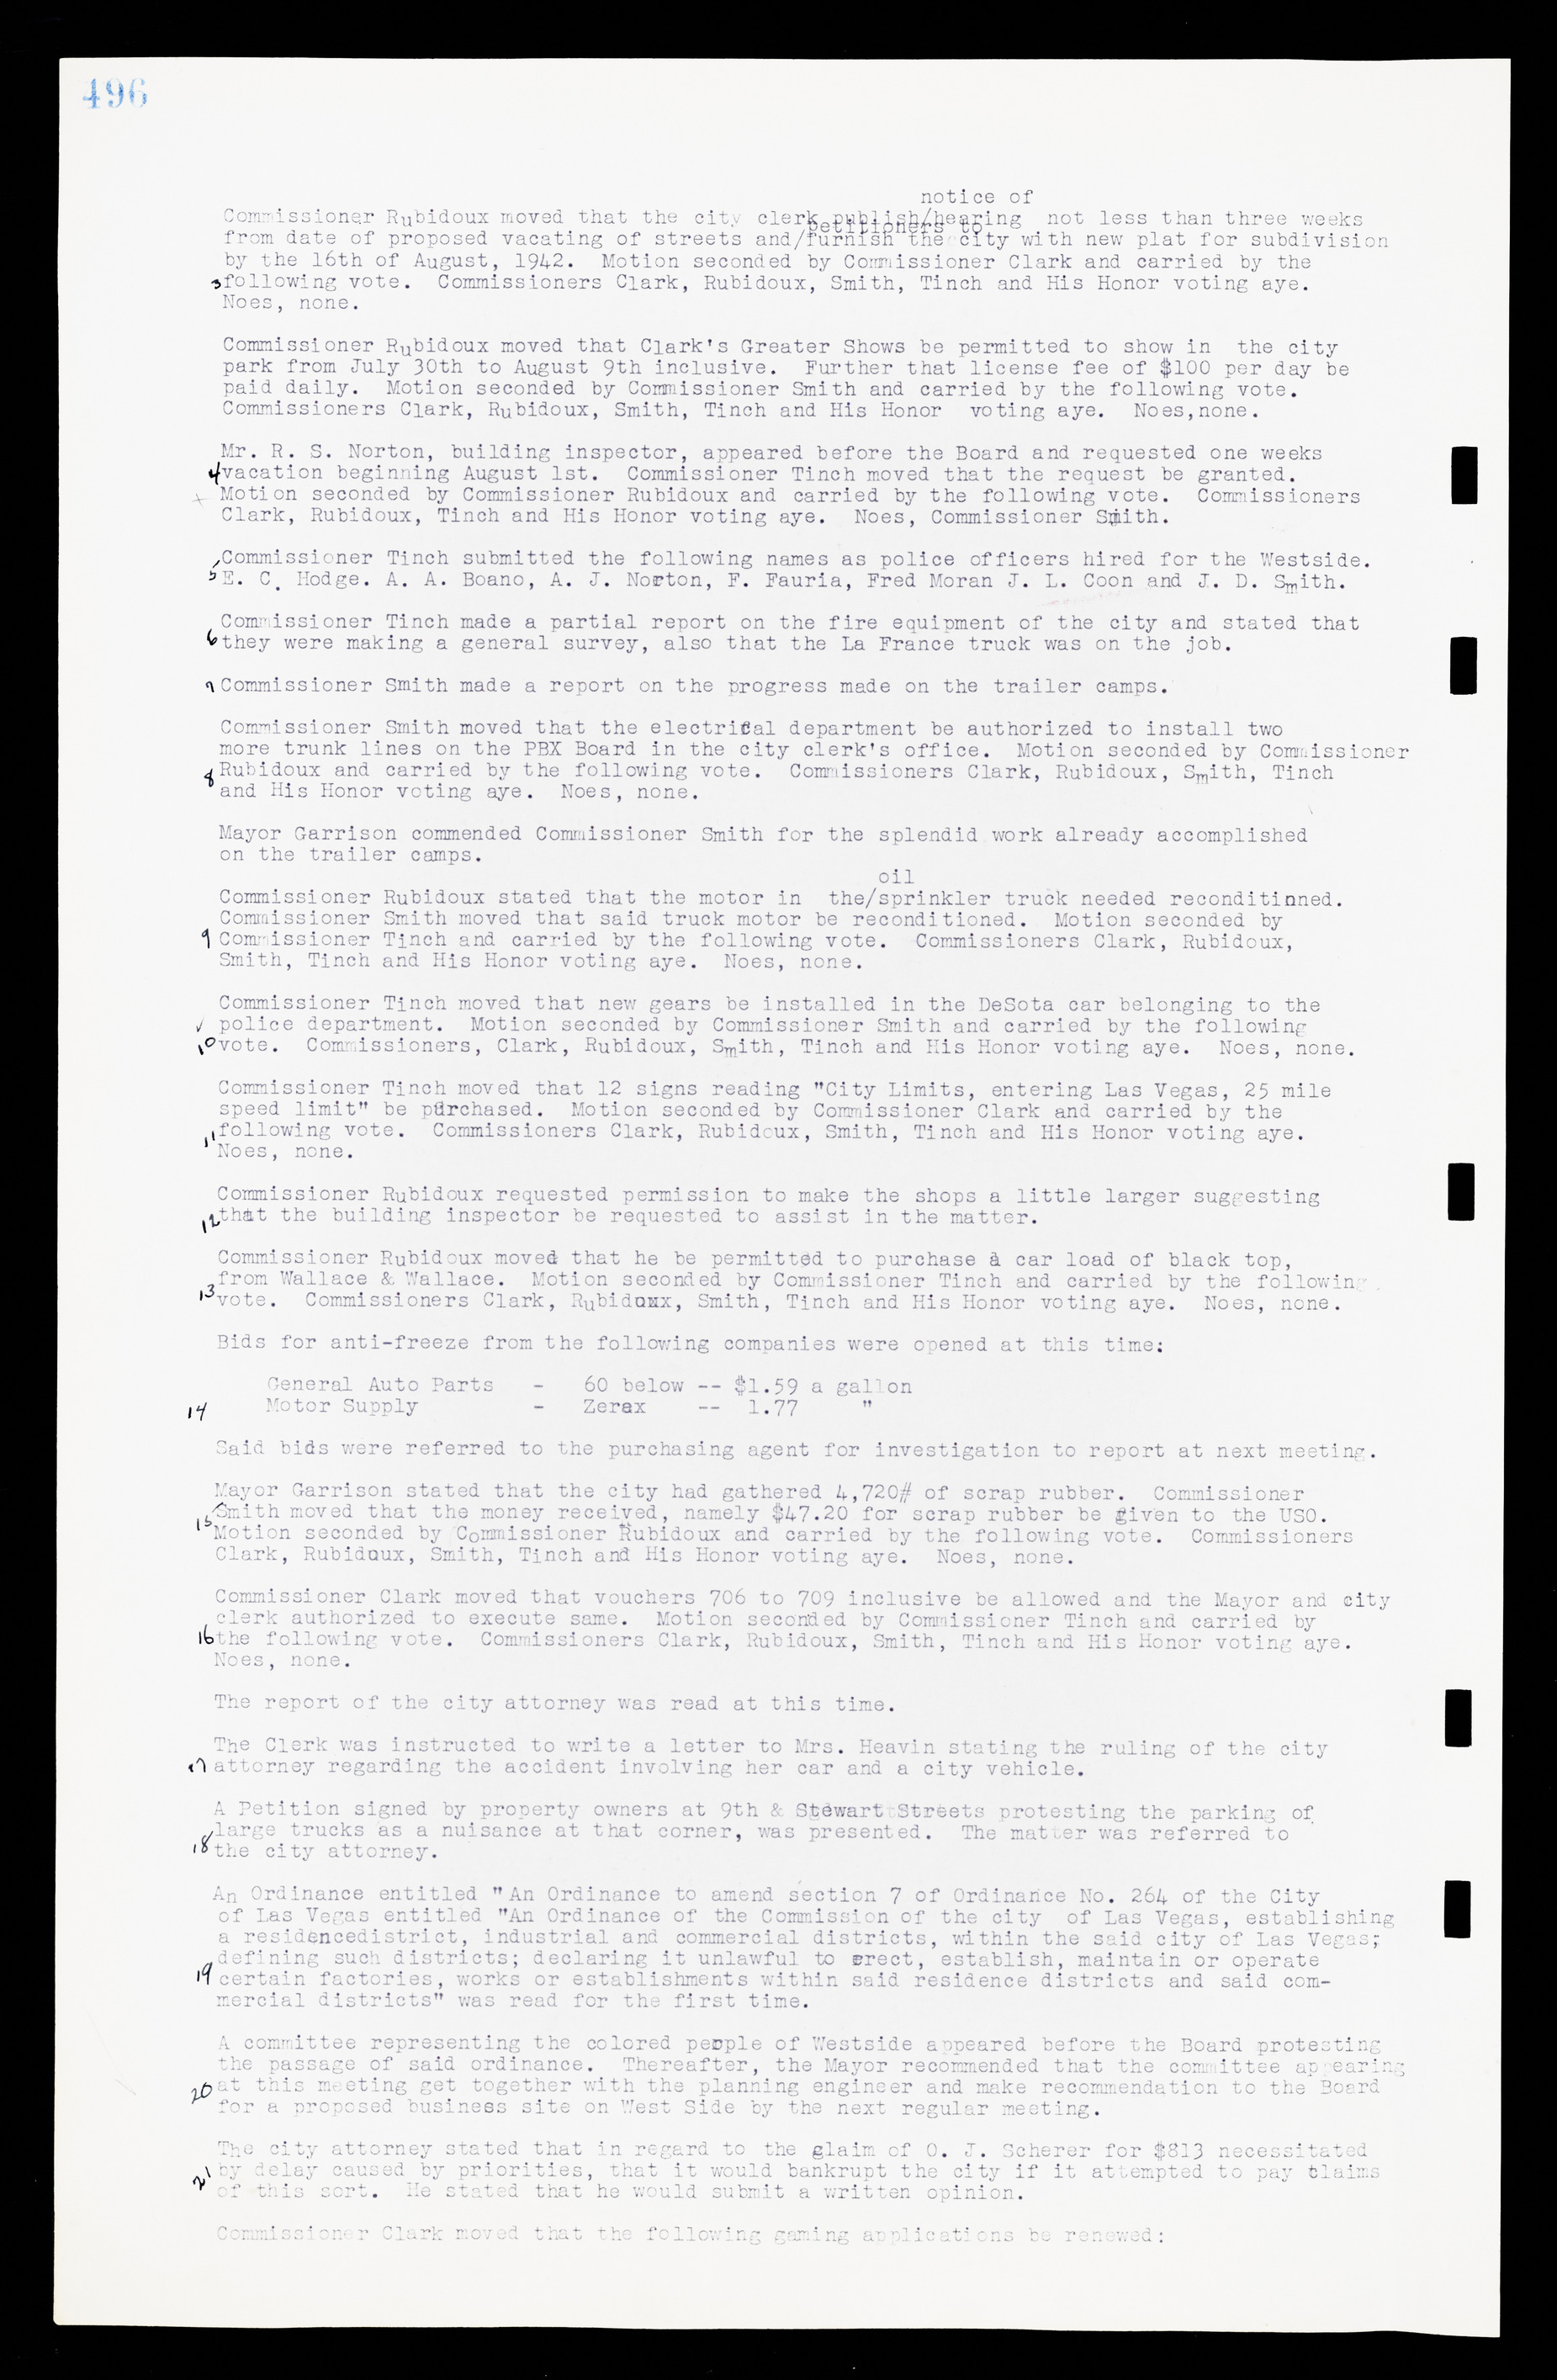 Las Vegas City Commission Minutes, February 17, 1937 to August 4, 1942, lvc000004-524